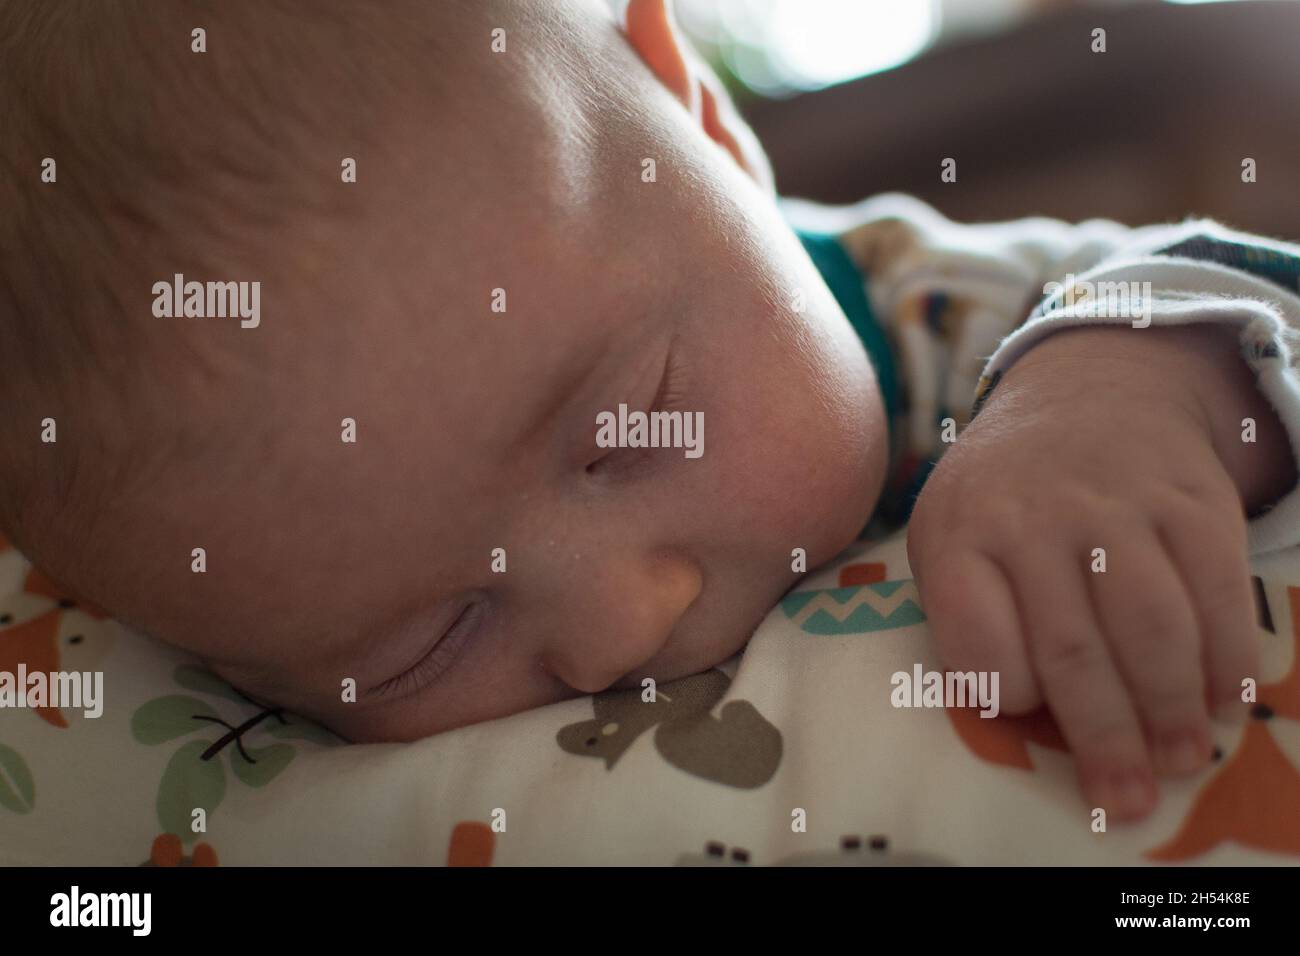 Newborn baby asleep on a nursing pillow during tummy time. Stock Photo